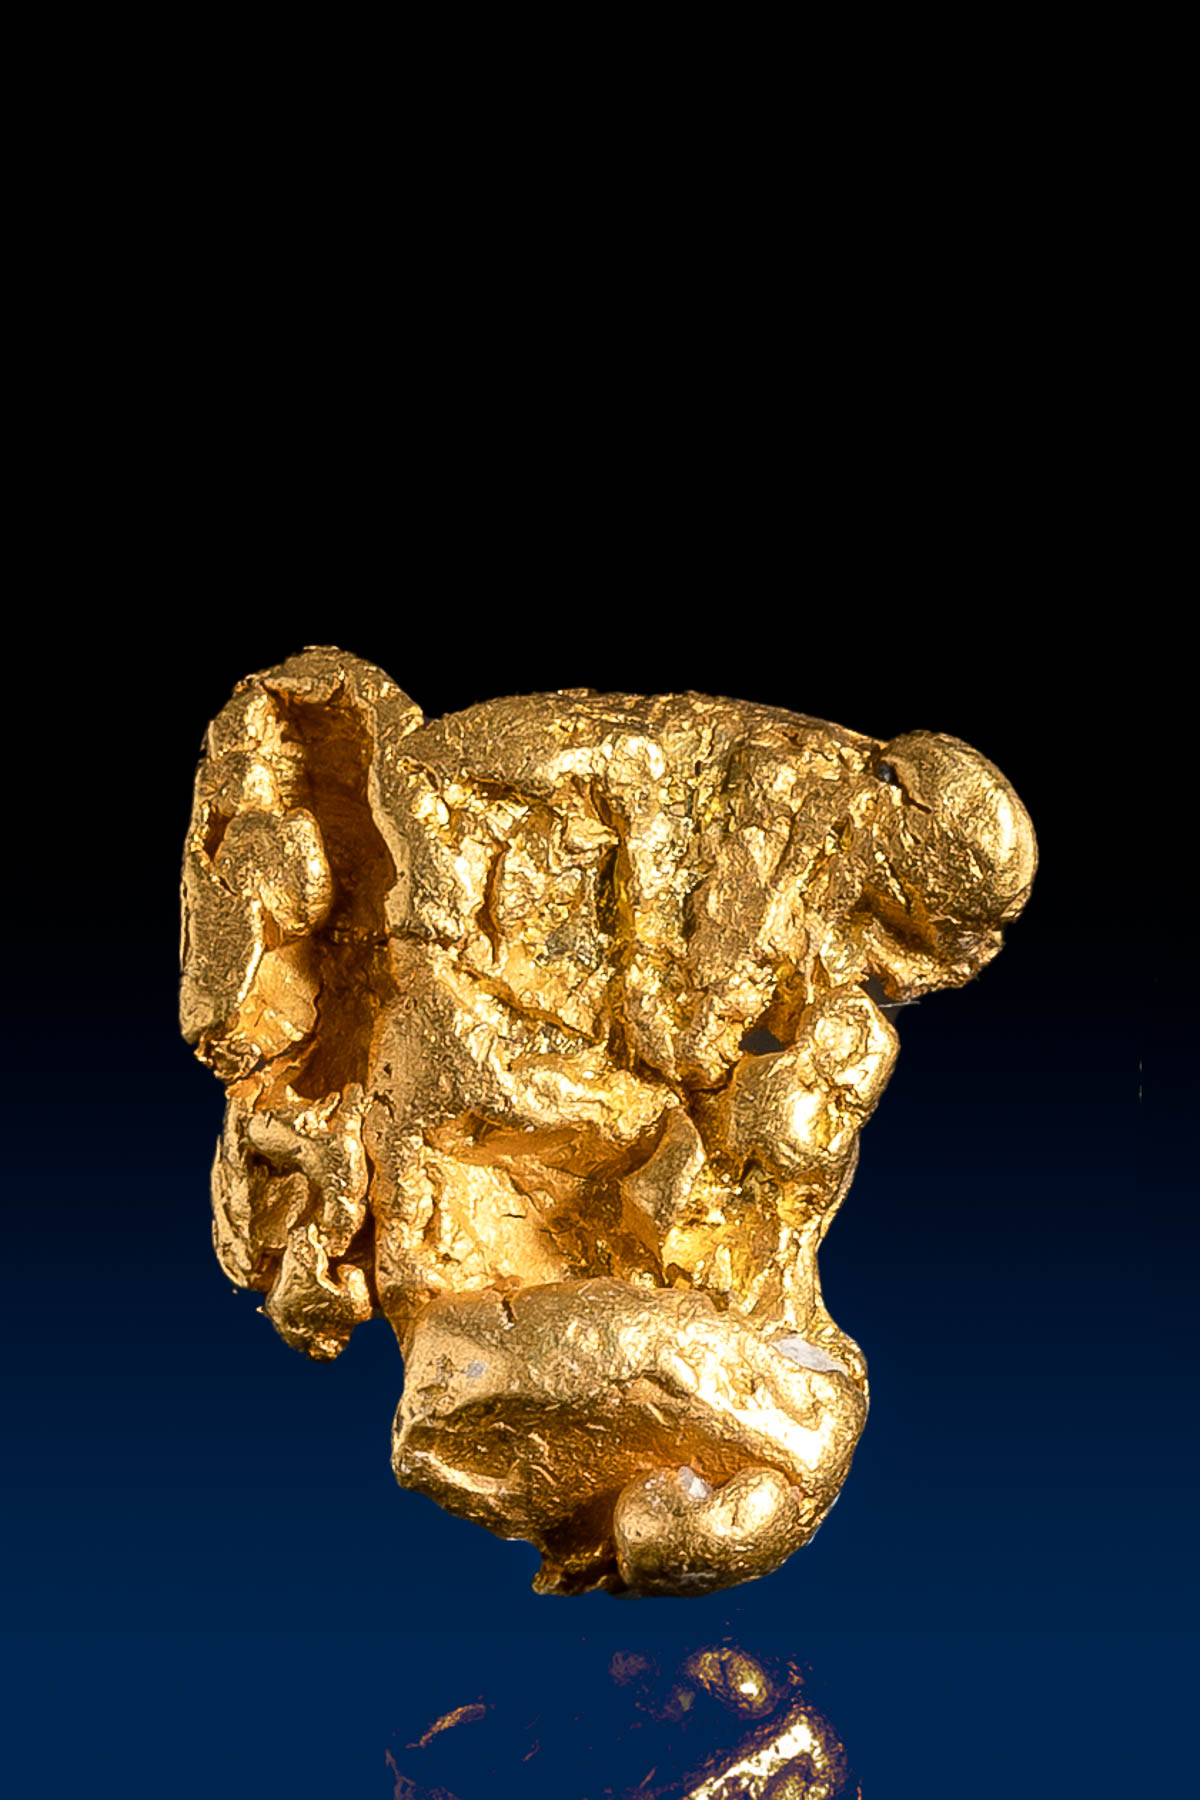 Most Interesting Natural Alaska Gold Nugget - 4.22 grams